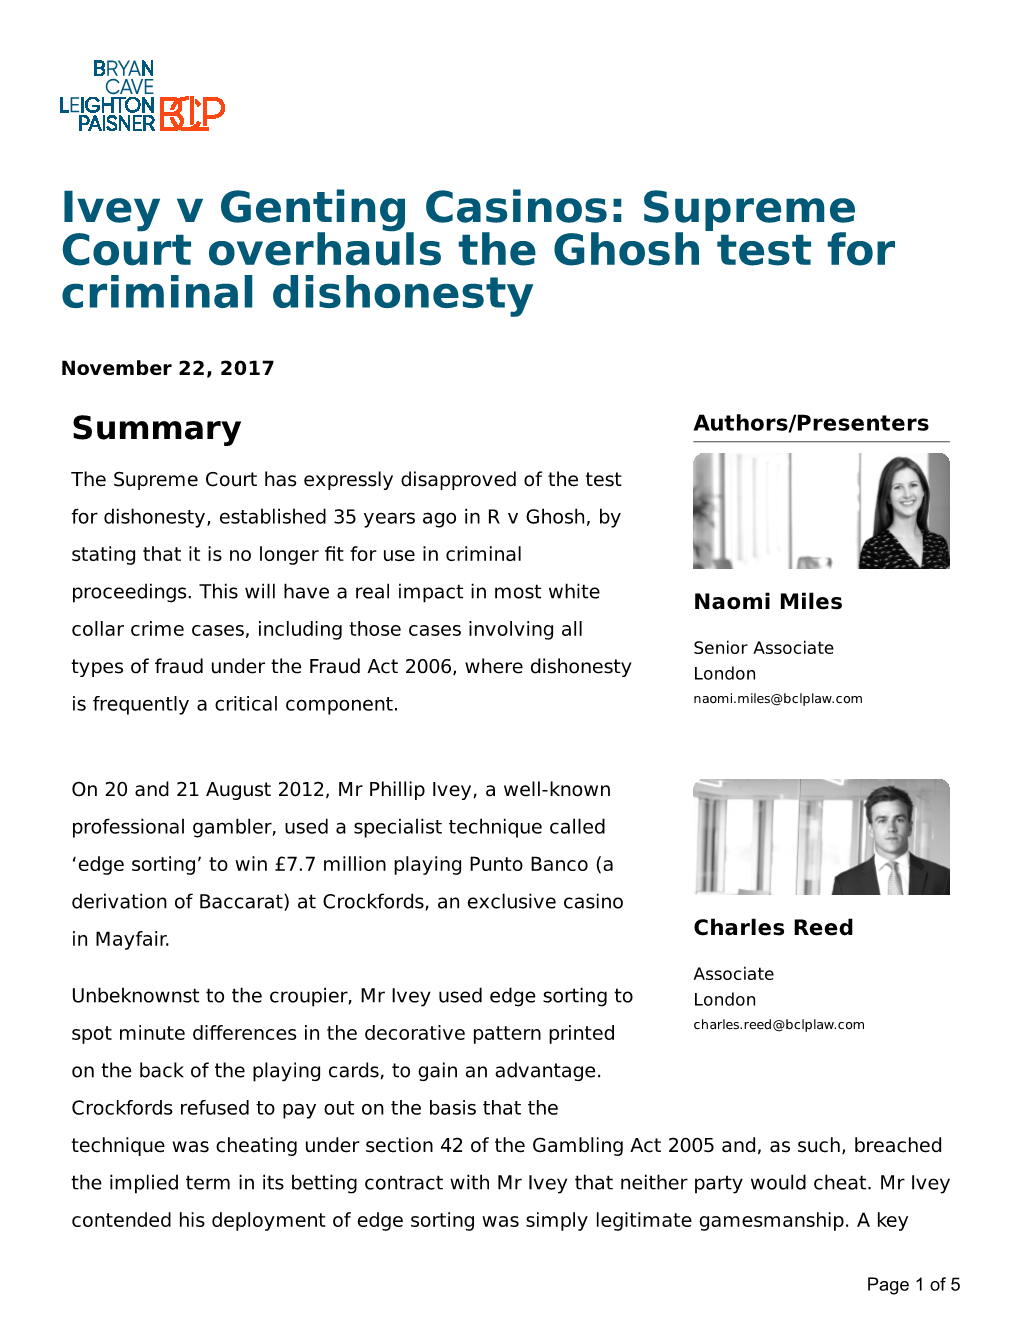 Ivey V Genting Casinos: Supreme Court Overhauls the Ghosh Test for Criminal Dishonesty